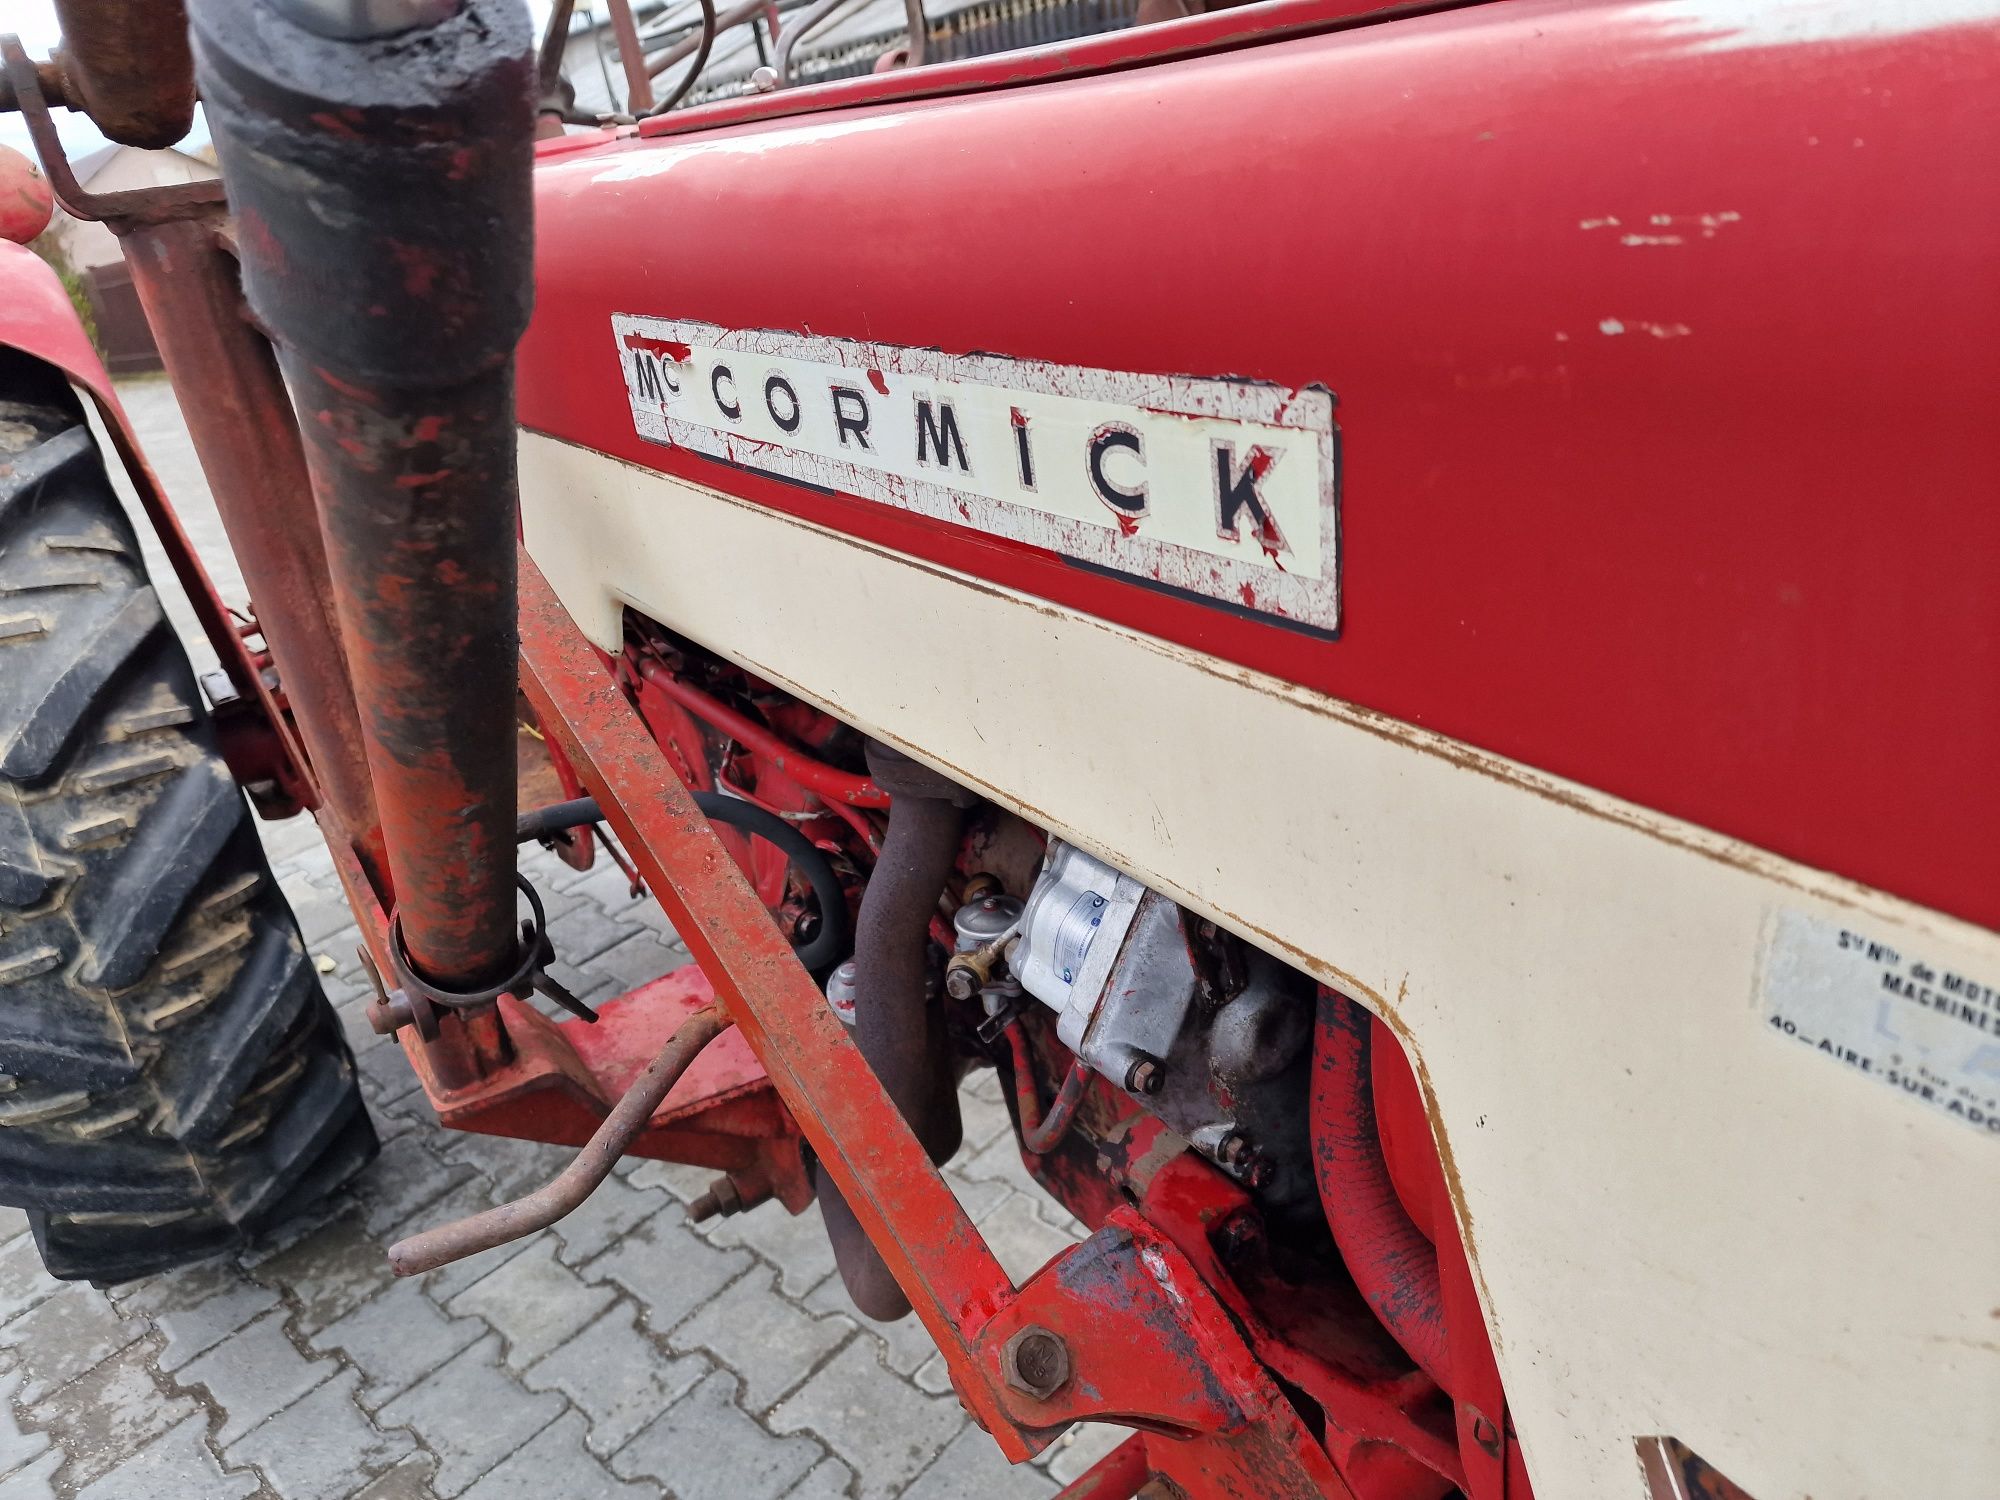 Tractor lternational MC  cormick